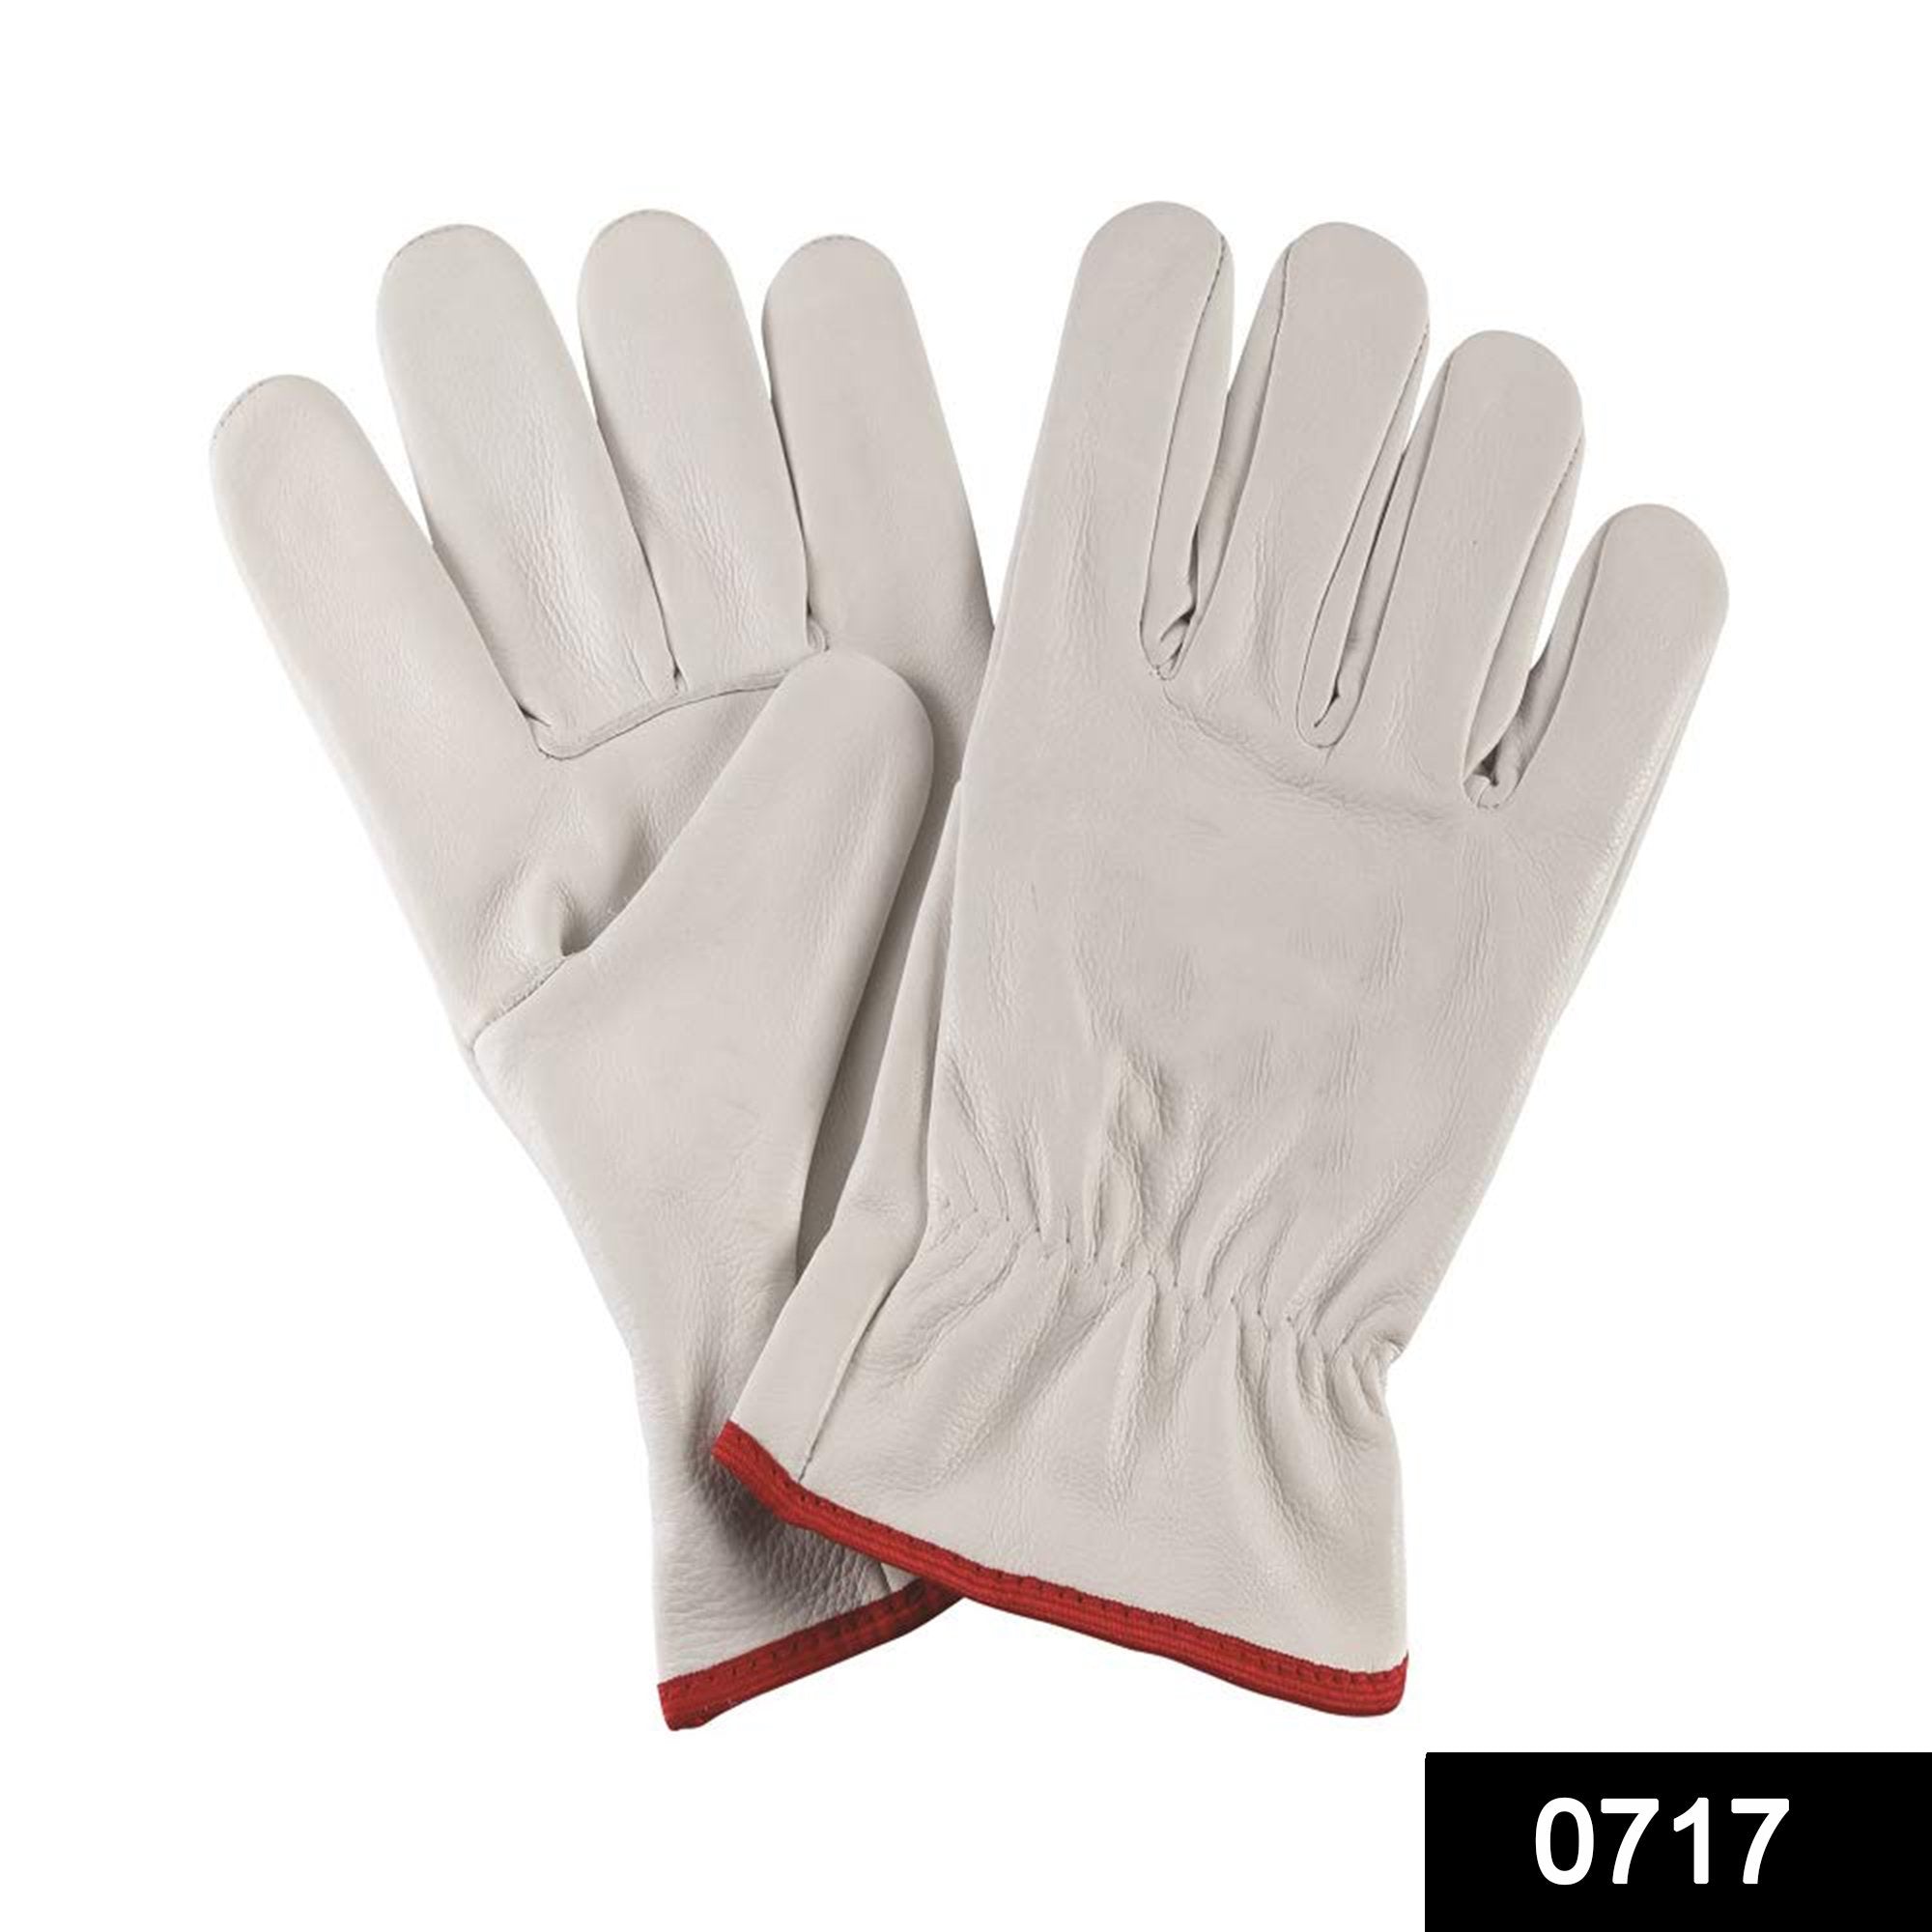 ambitionofcreativity in hand safety gear hand gloves leather split 1 pair